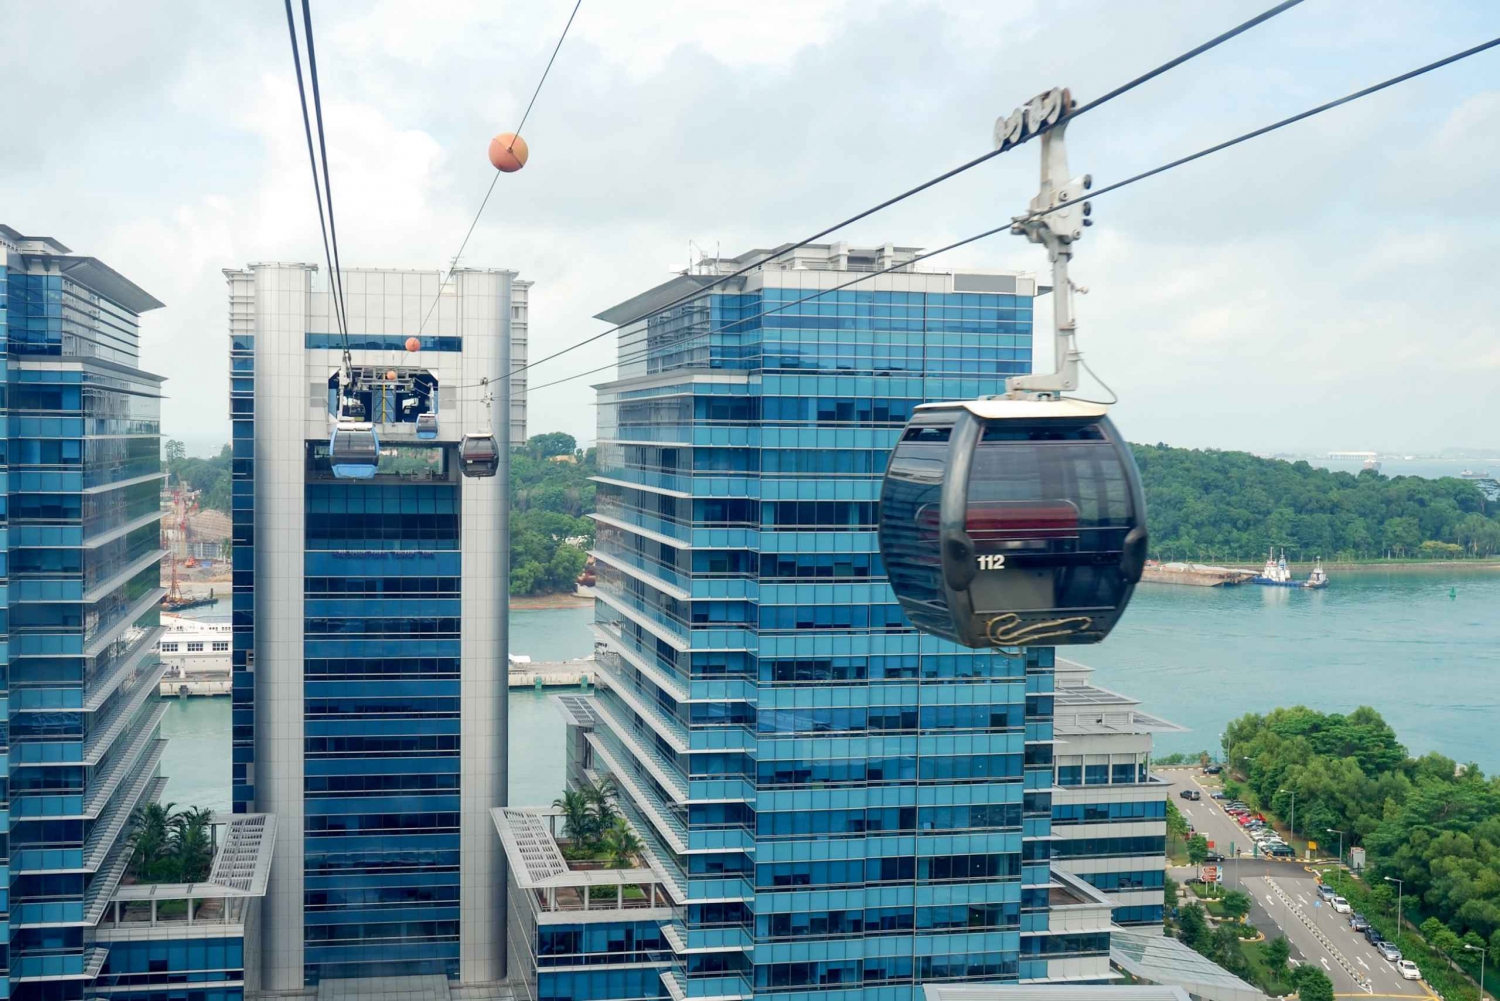 Singapore: Sentosa Cable Car Sky Pass Ticket